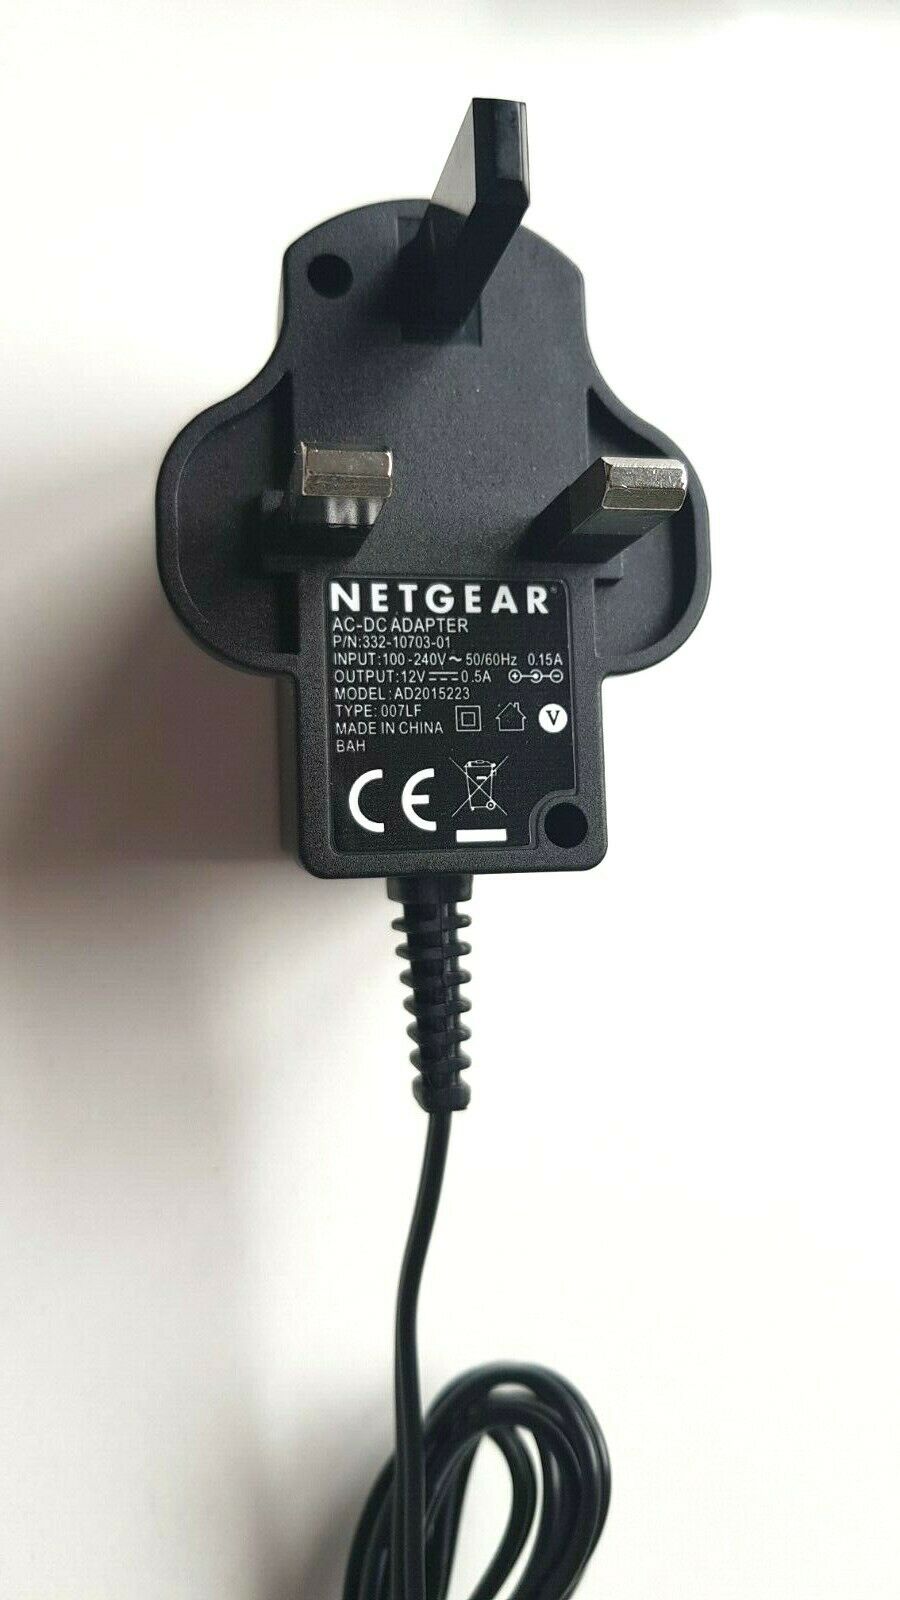 New NETGEAR AD2015223 12V 0.5A 332-10703-01 AC DC POWER ADAPTER UK PLUG